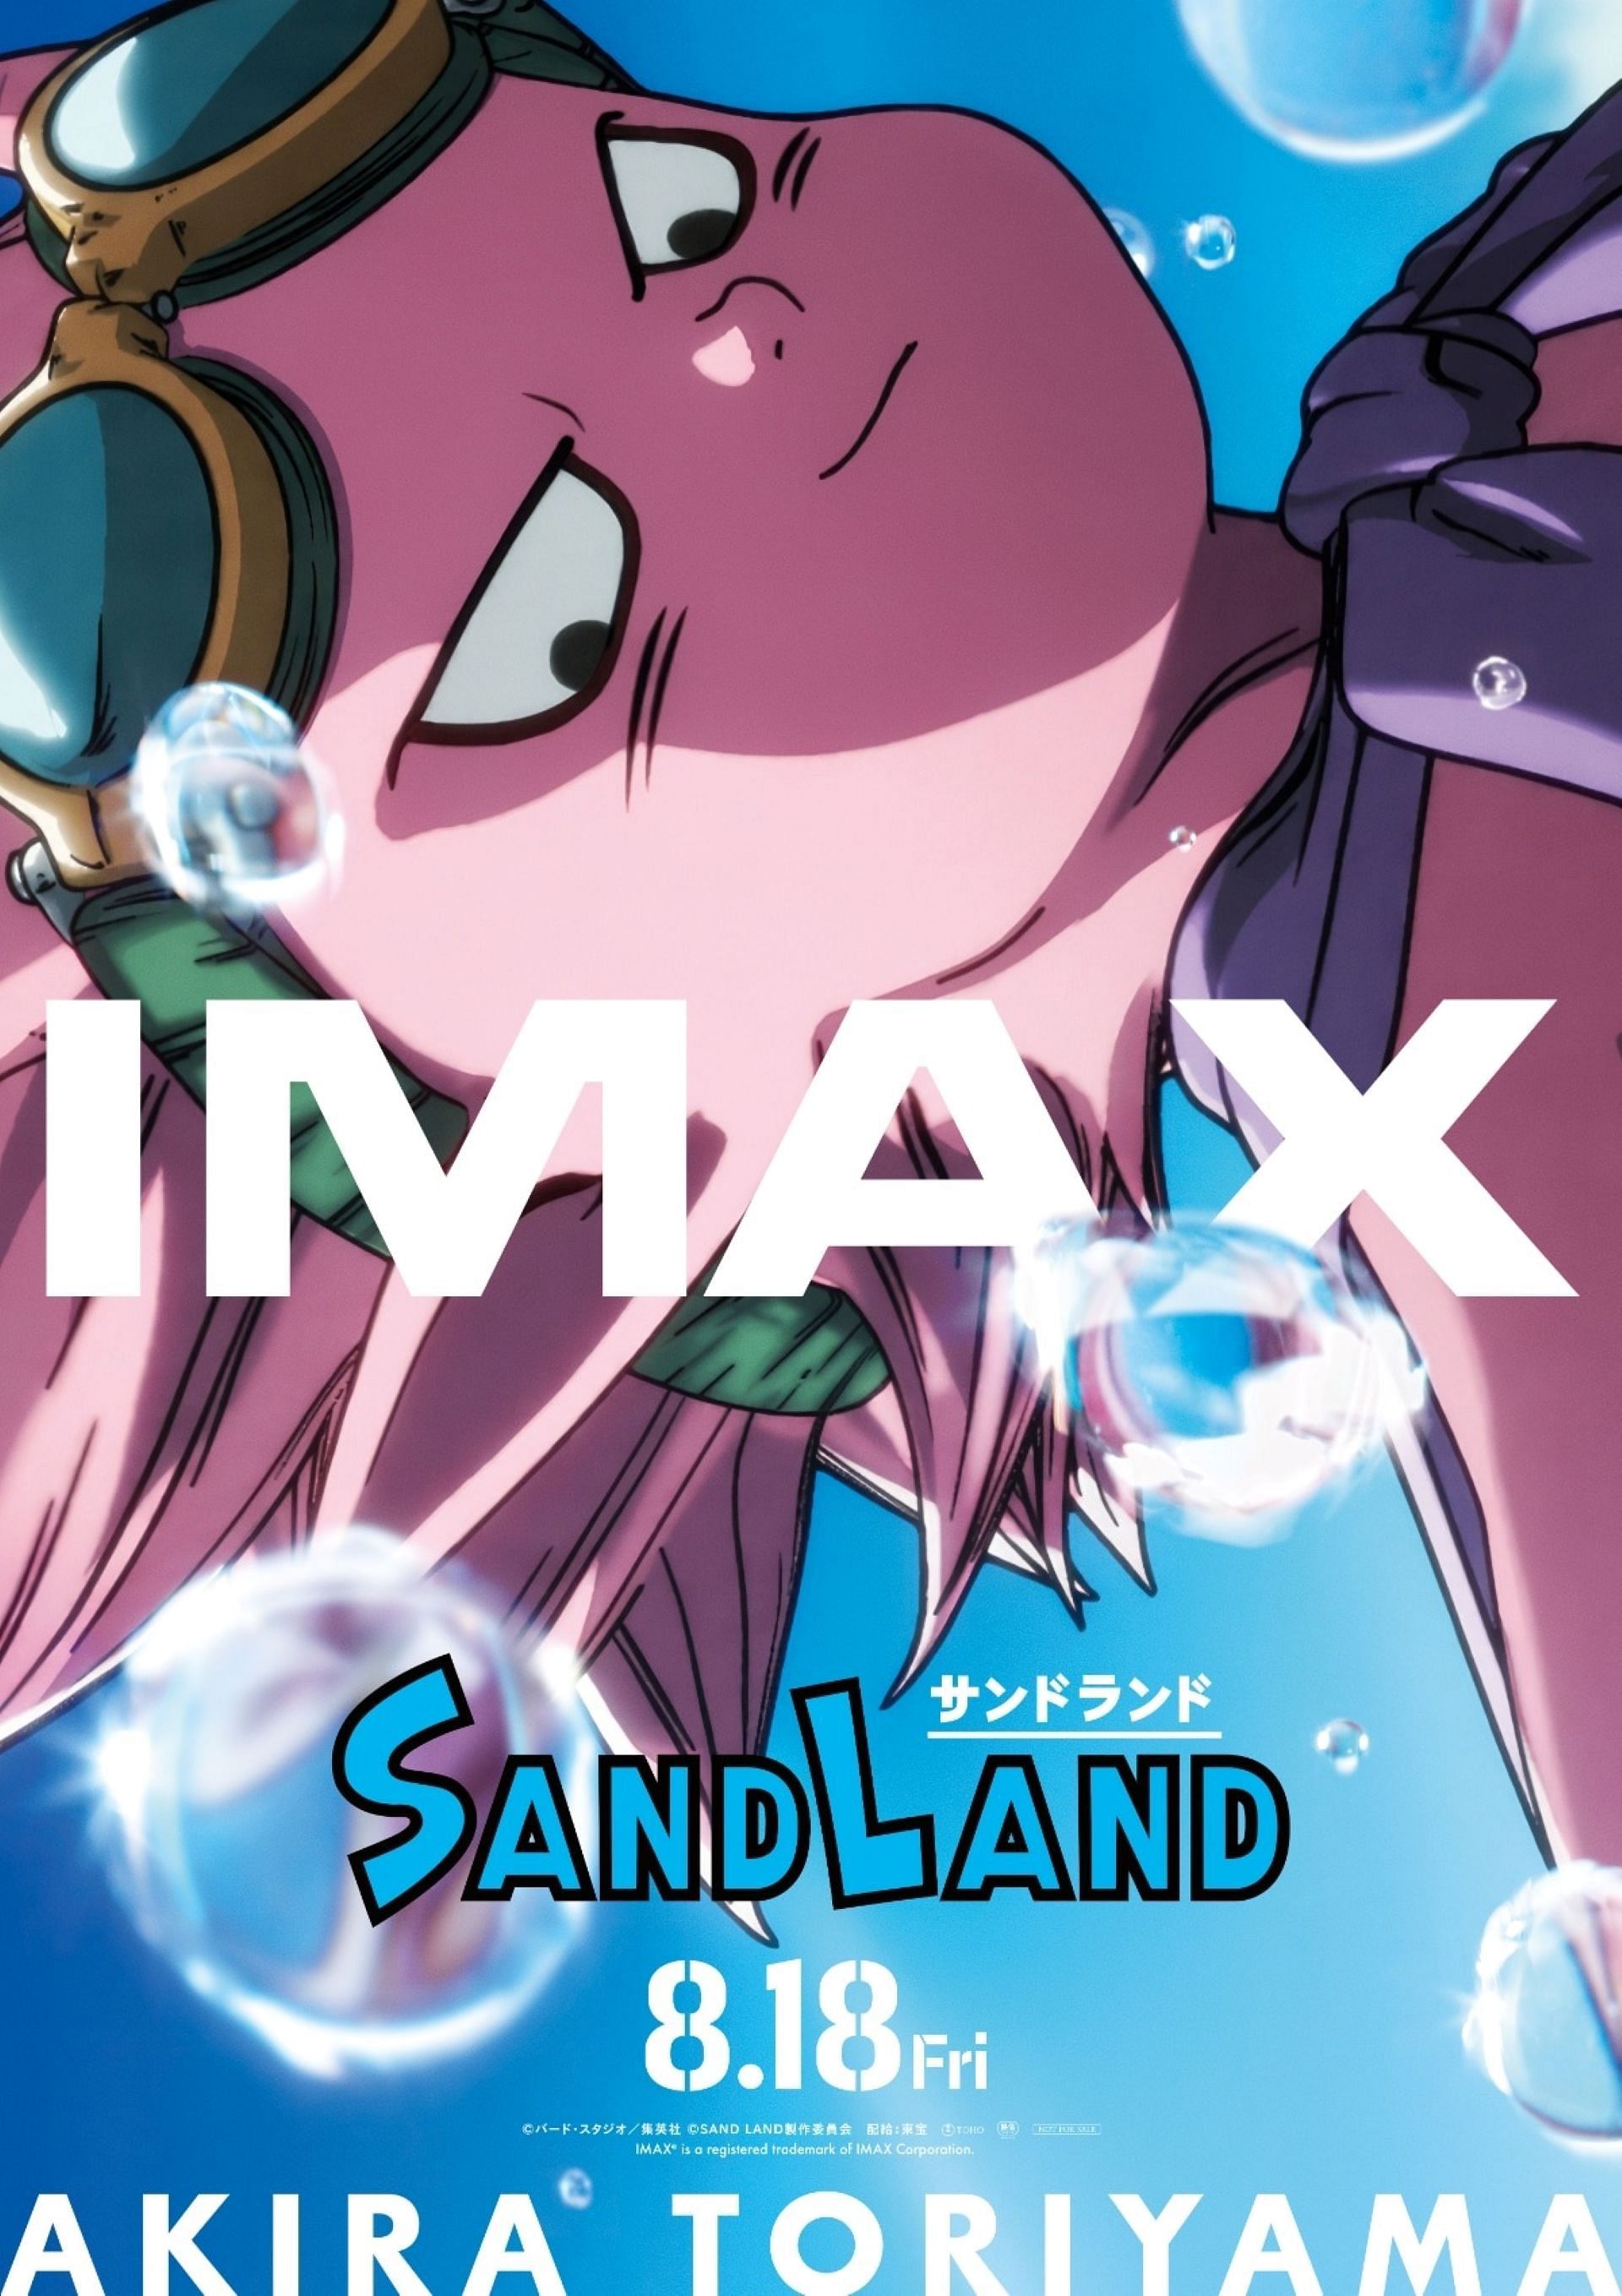 Sand Land movie poster (Image via sandland.jp)